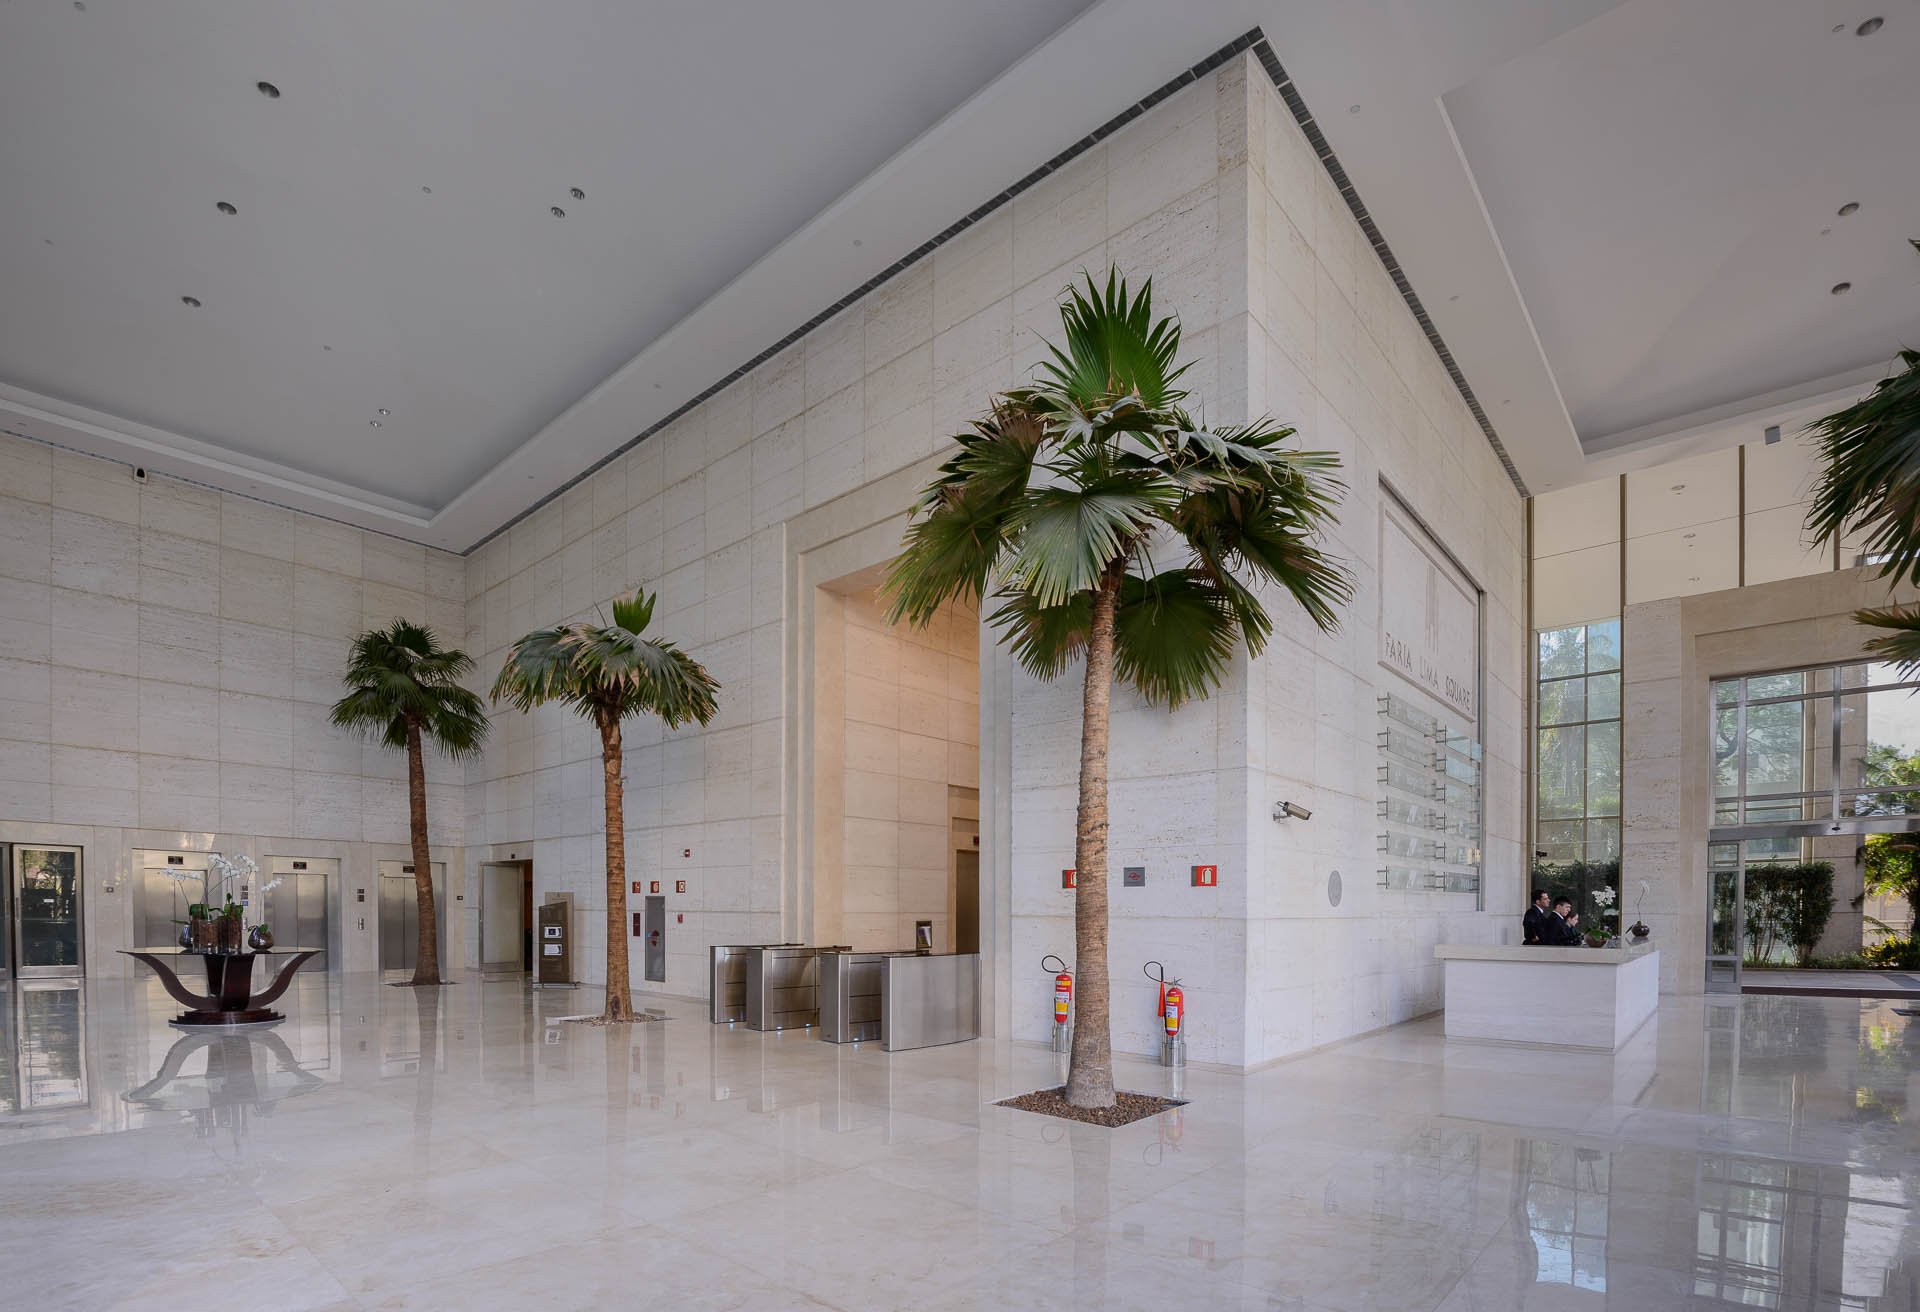 Faria Lima Square lobby facing the reception area and elevators.